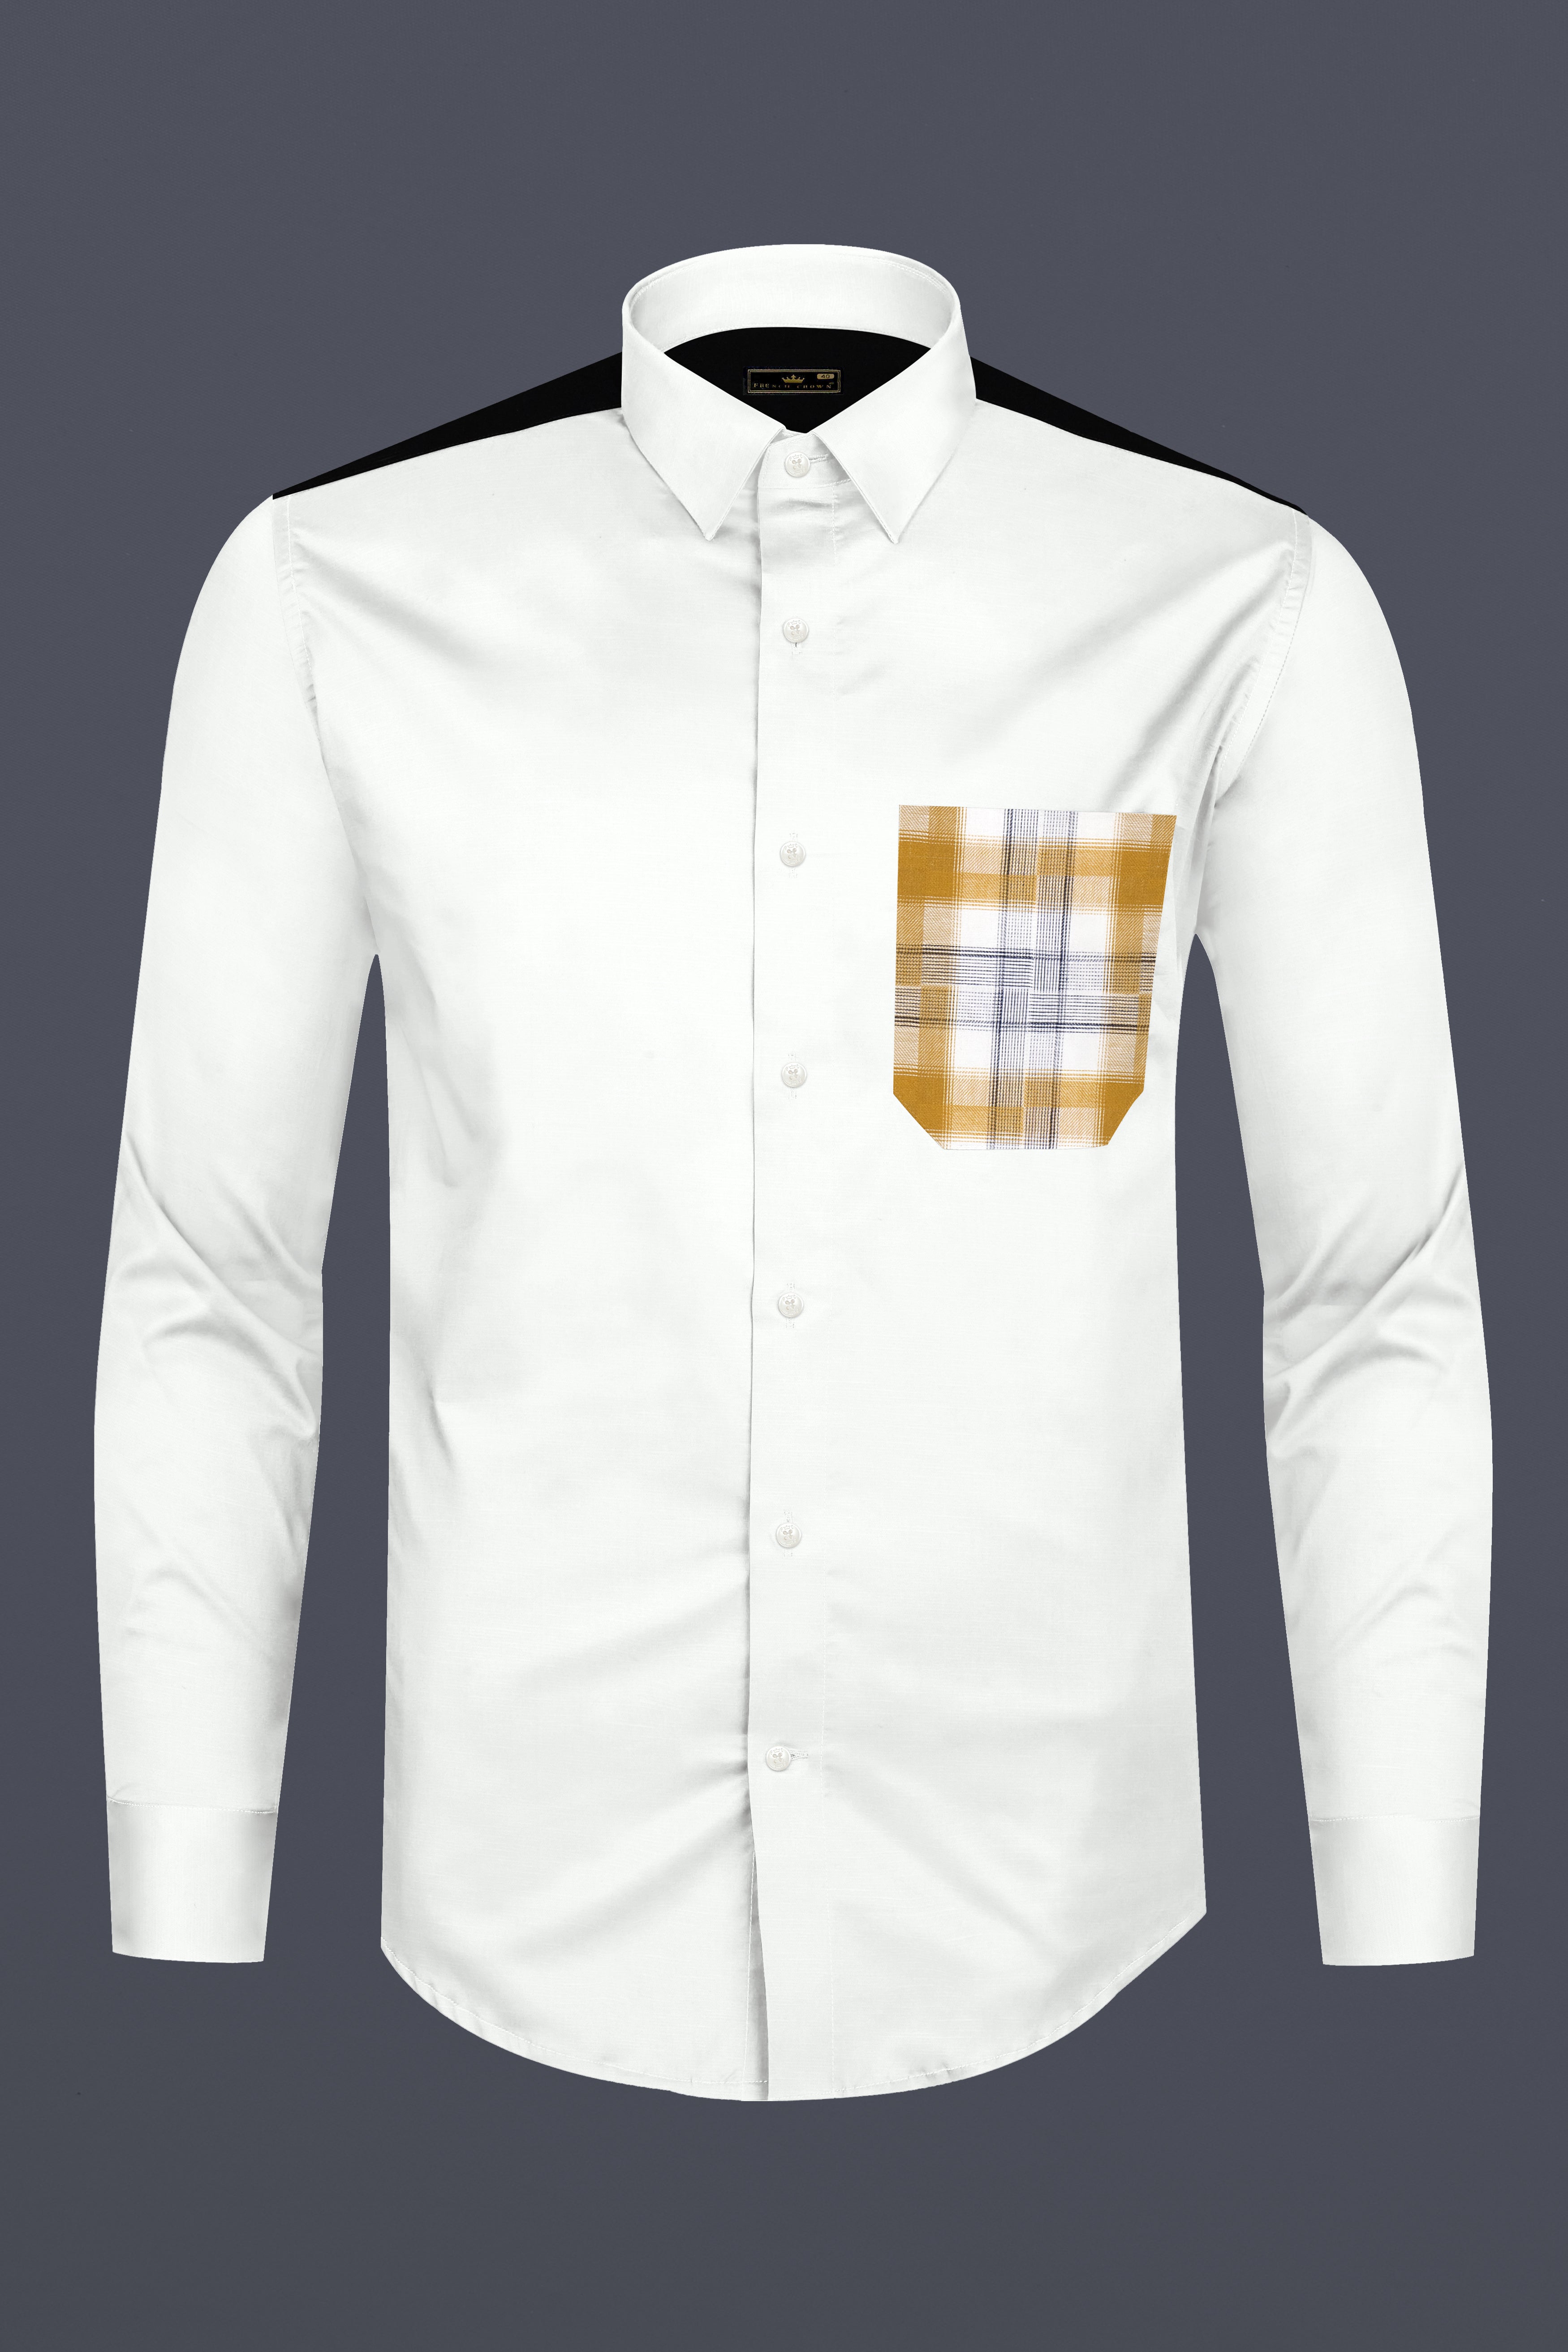 Bright White with Checkered Back Super Soft Premium Cotton Shirt